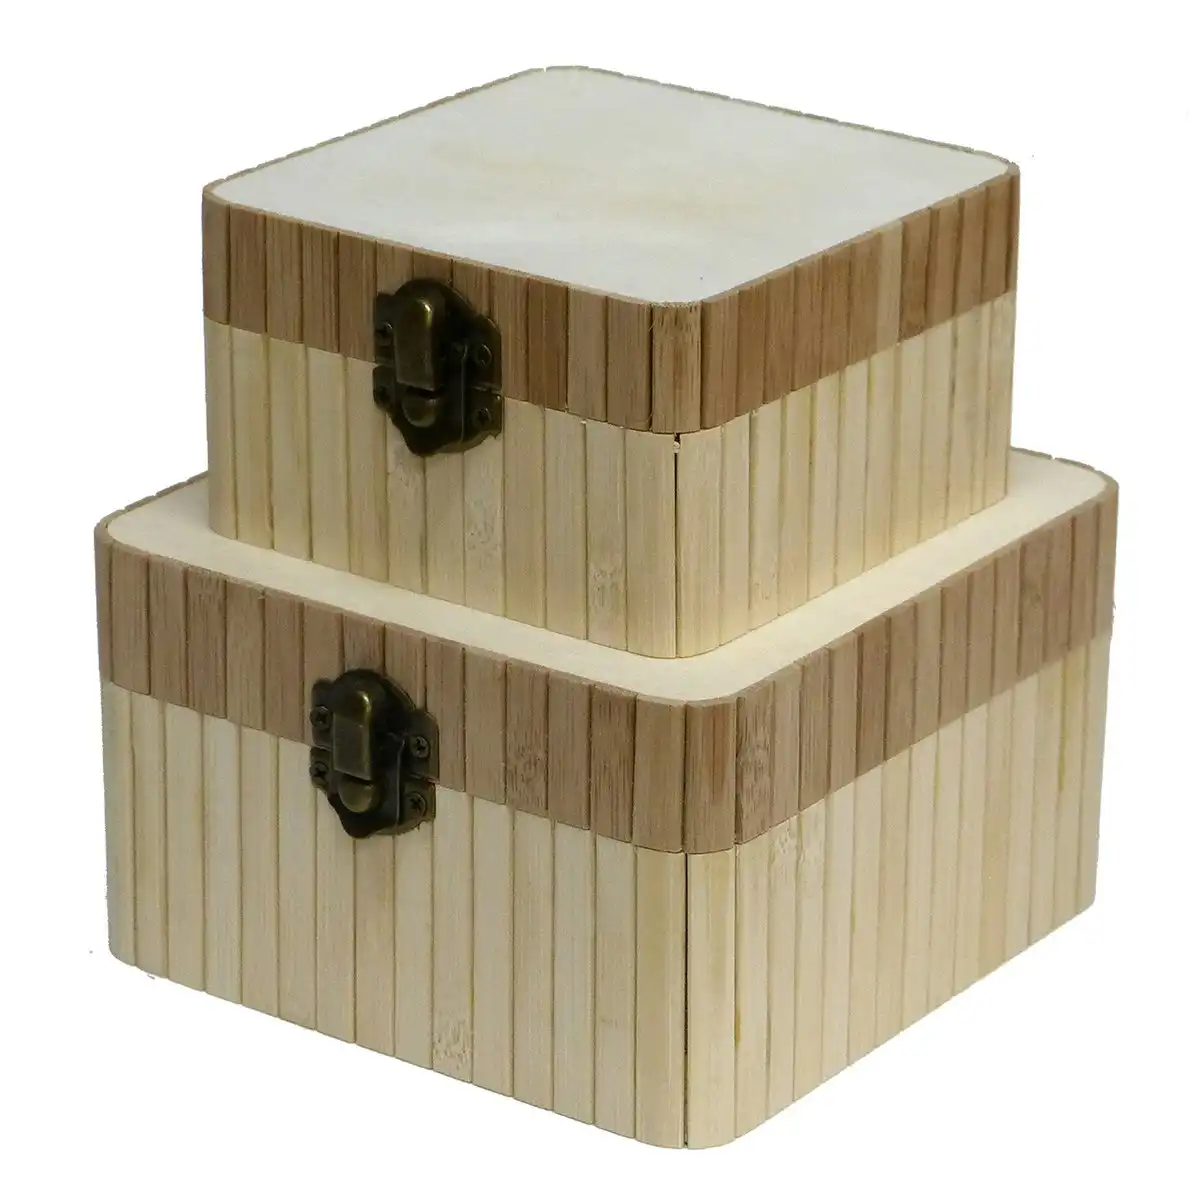 2pc Boyle Craft Bamboo Square Storage Boxes w/ Catch/Lid Art DIY Organiser Set